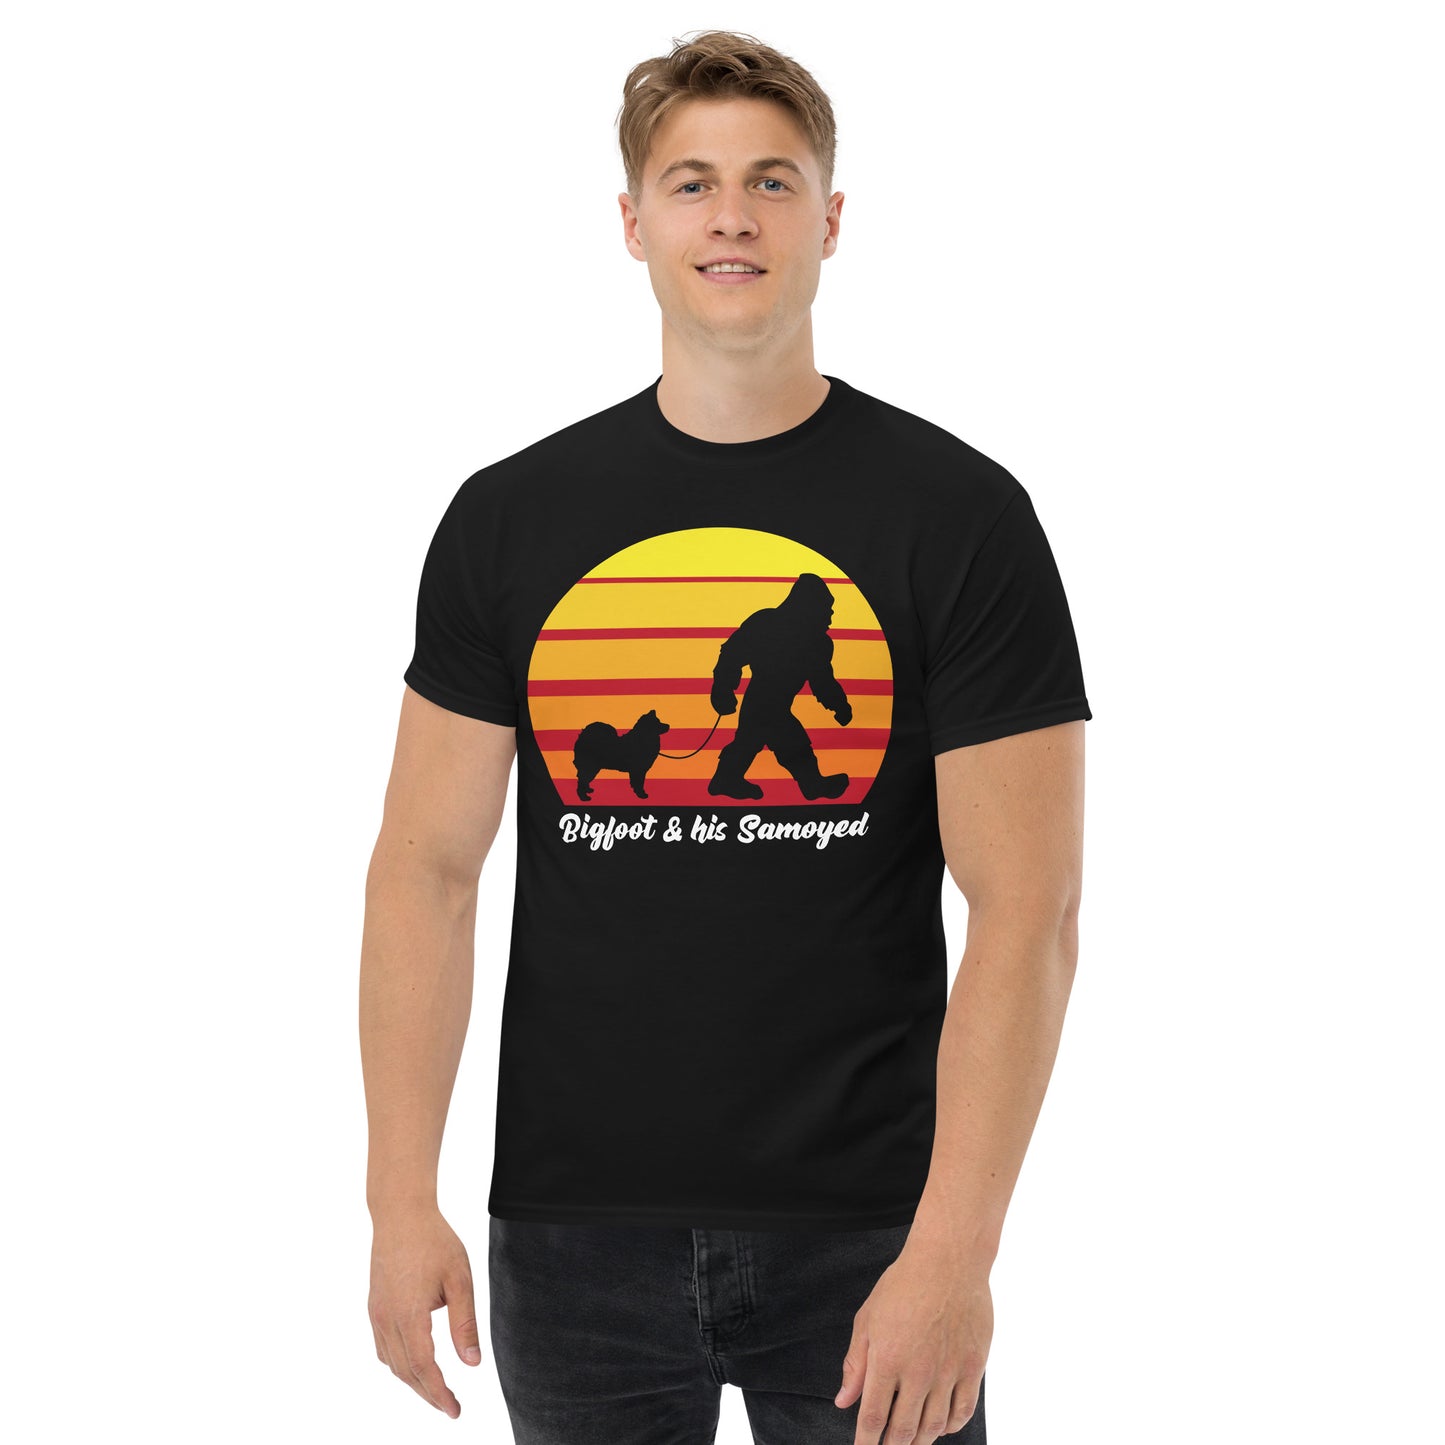 Bigfoot and his Samoyed men’s black t-shirt by Dog Artistry.